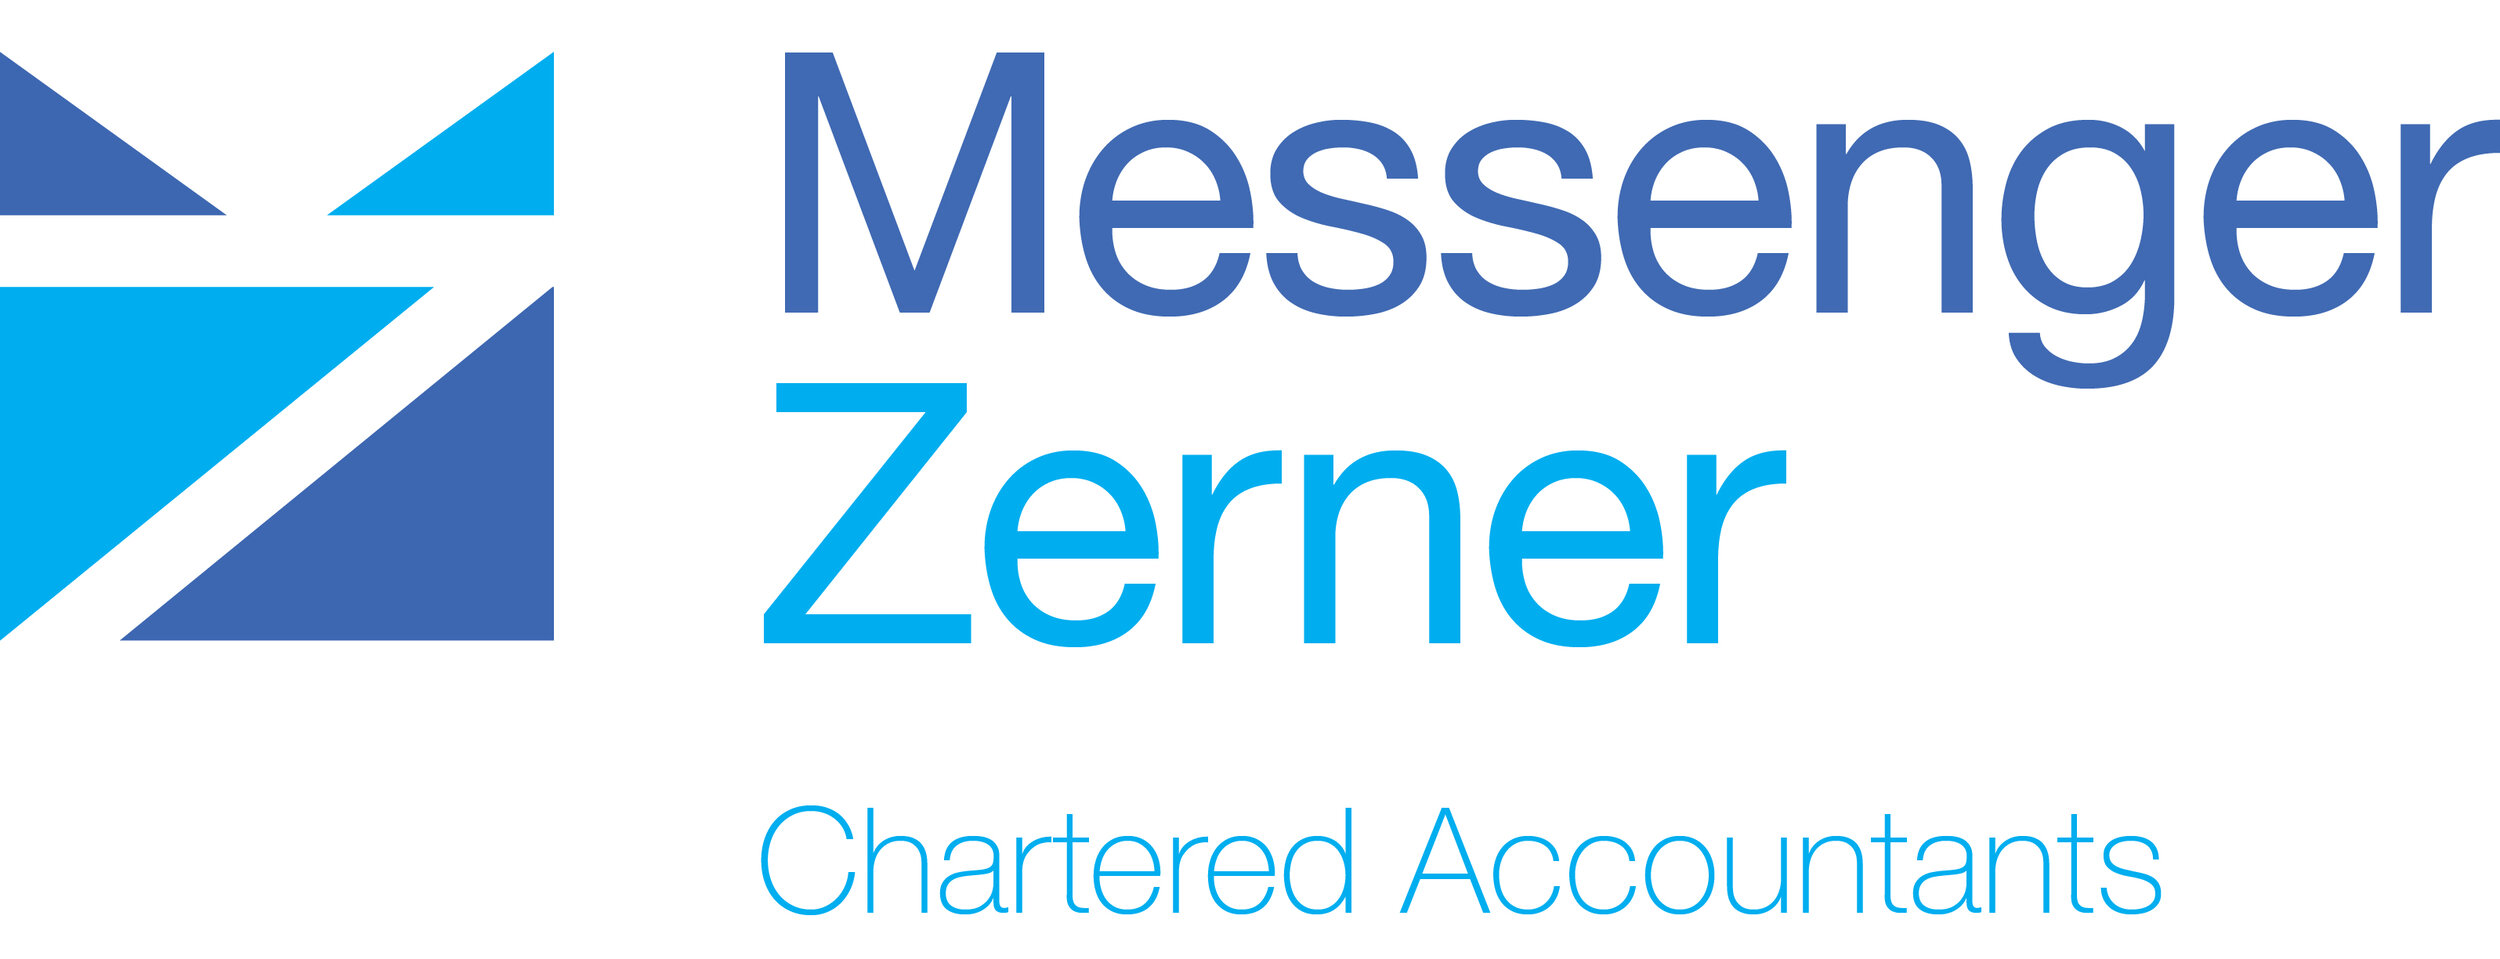 messenger-zerner-logo.jpg